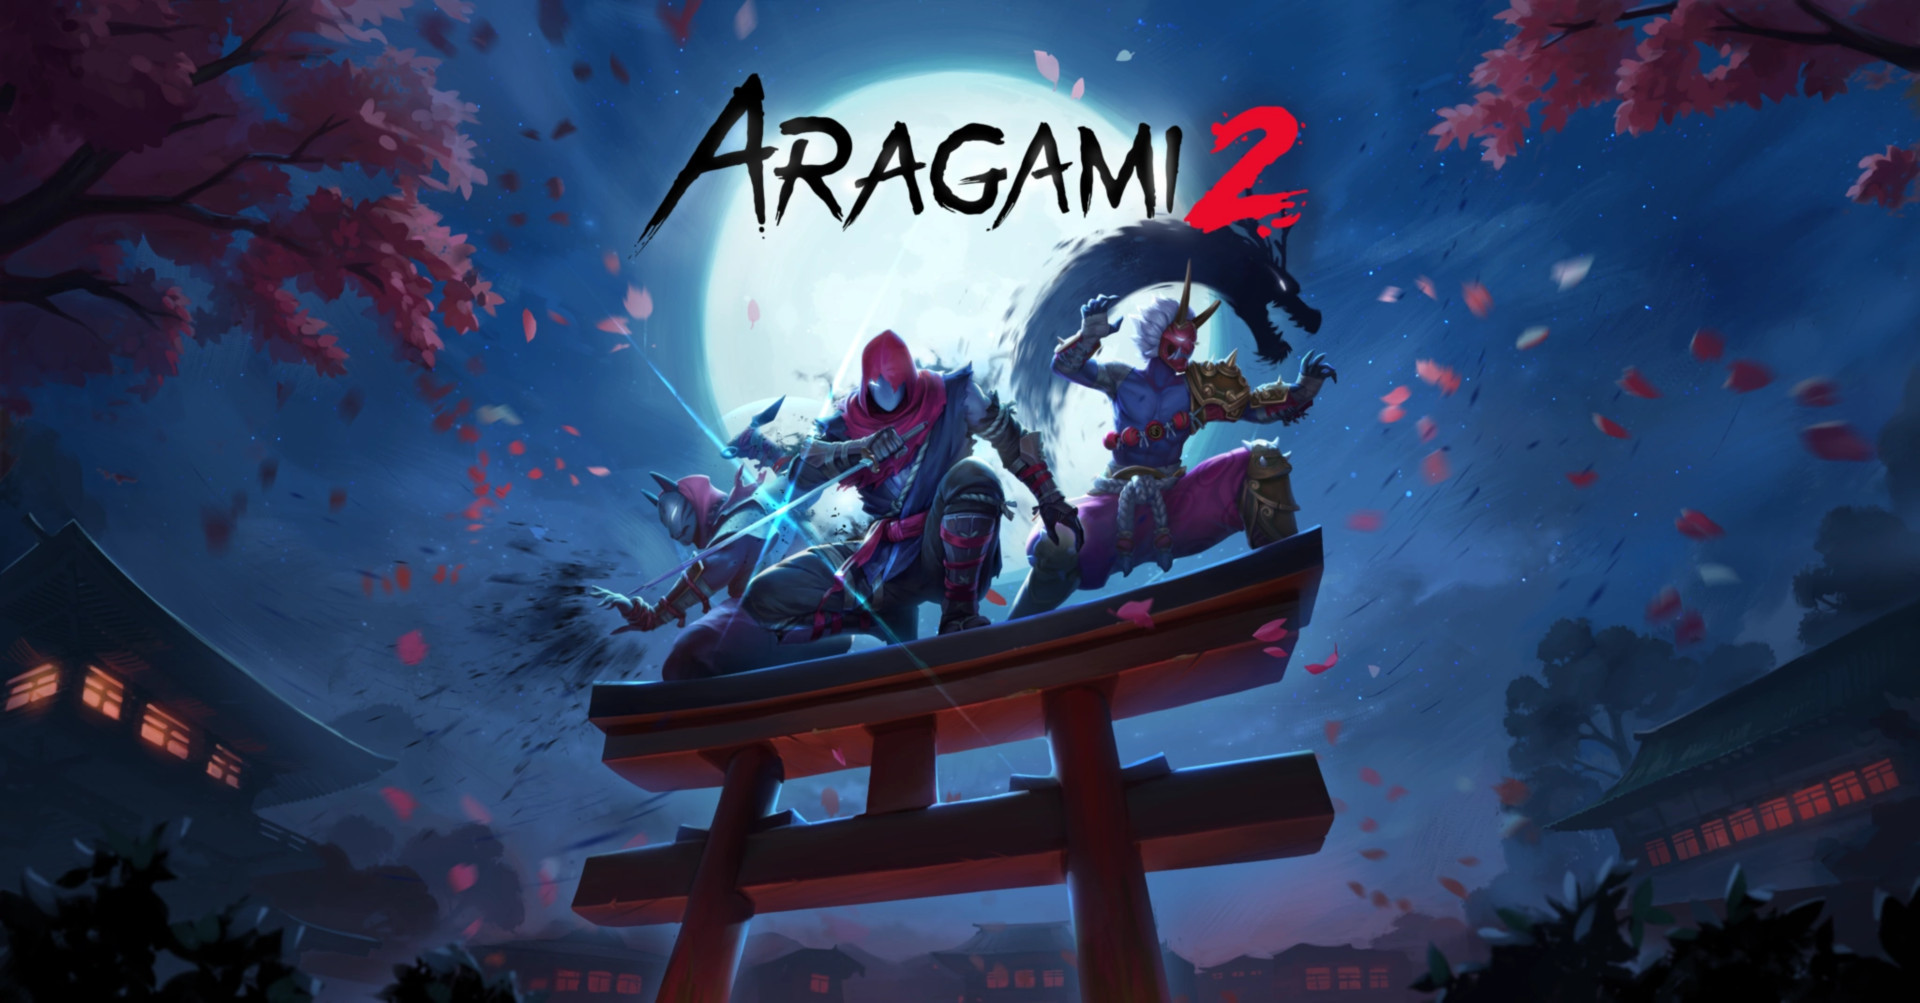 Aragami 2 荒神2 Ps4 Ps5繁体中文版今日发售